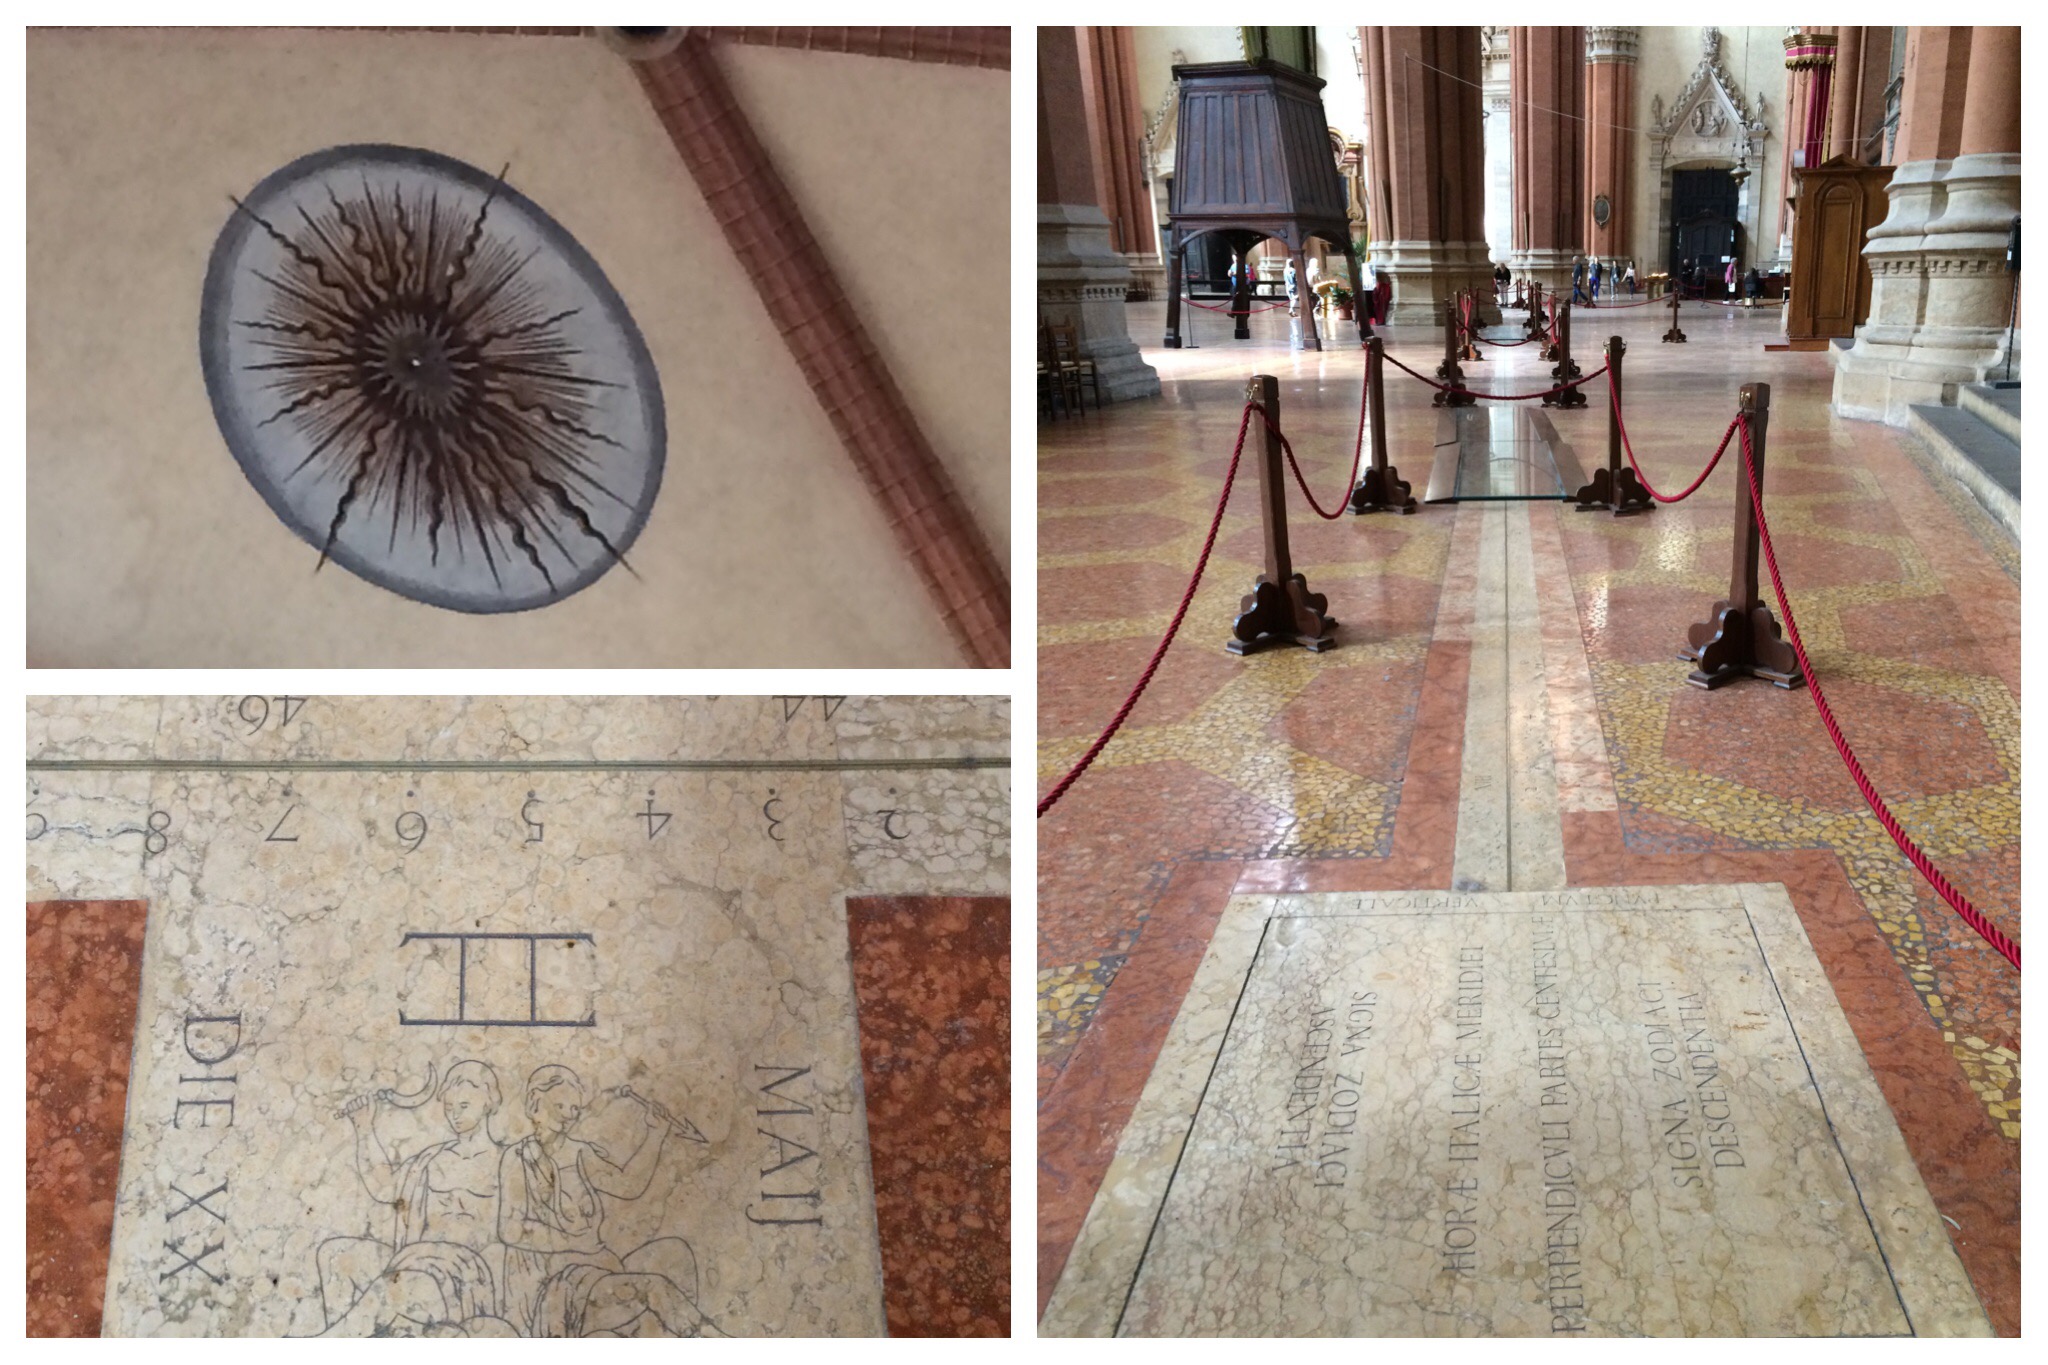 Bologna - San Petronio cathedral Cassini meridian line sundial